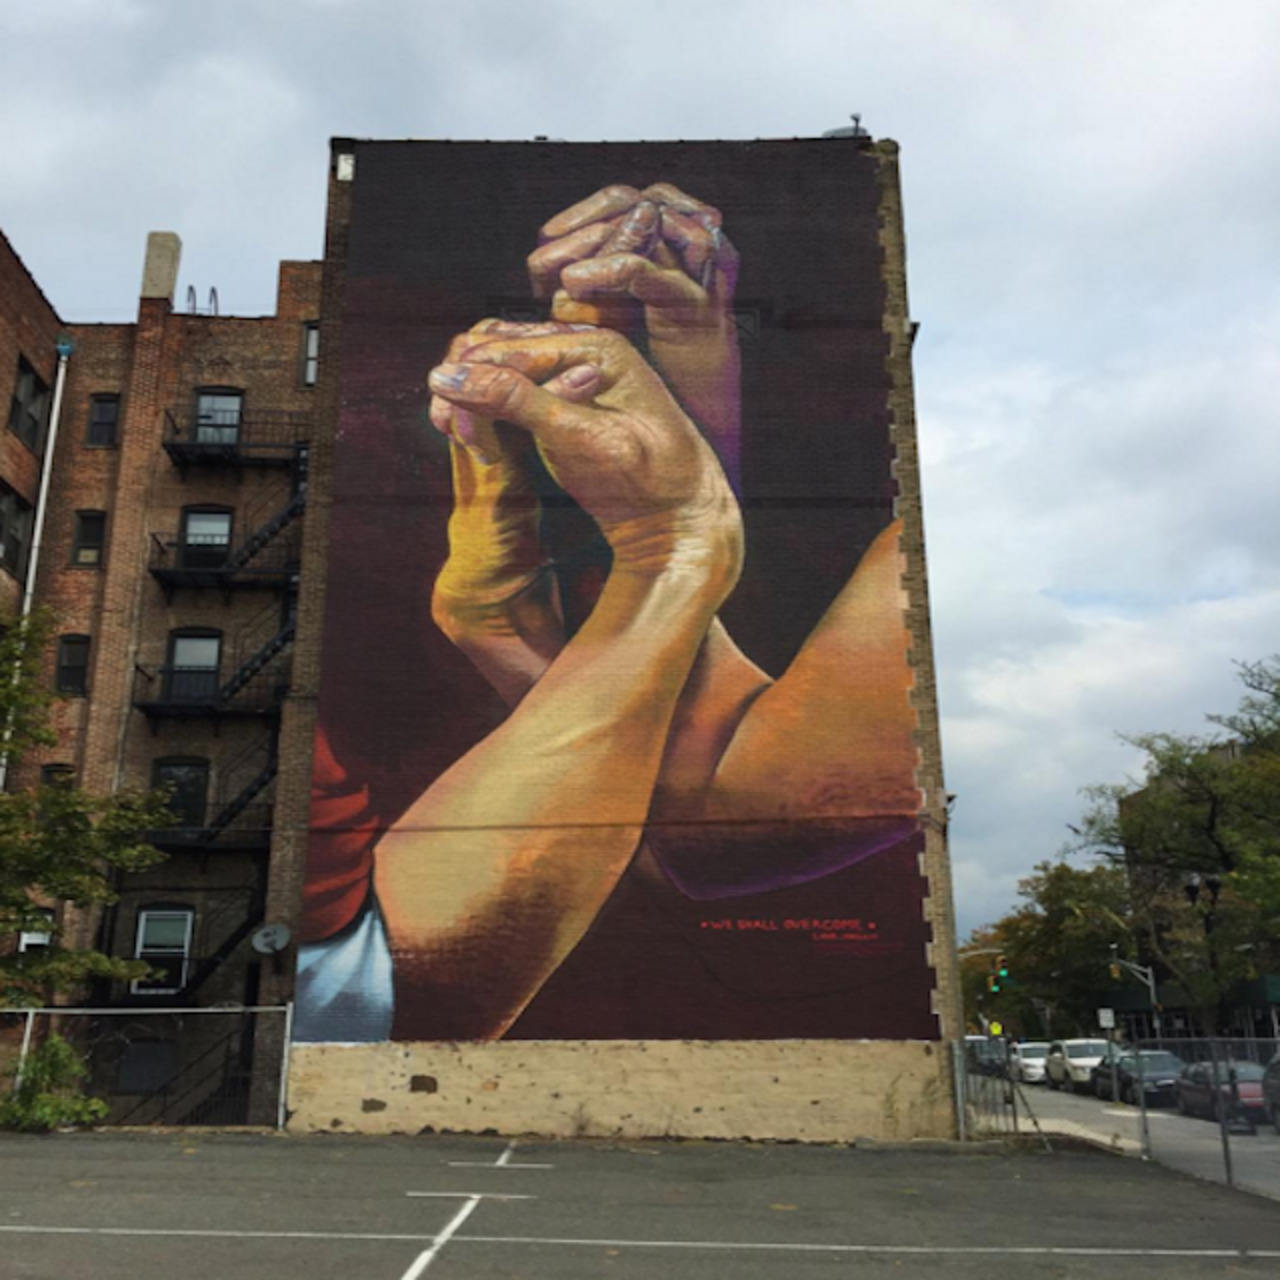 RT @allcitycanvas: "We shall overcome" @case_maclaim 's #mural in #jerseycity on the #25yearsofgermanunity  #graffiti #streetart http://t.co/IfTAVUCmHh